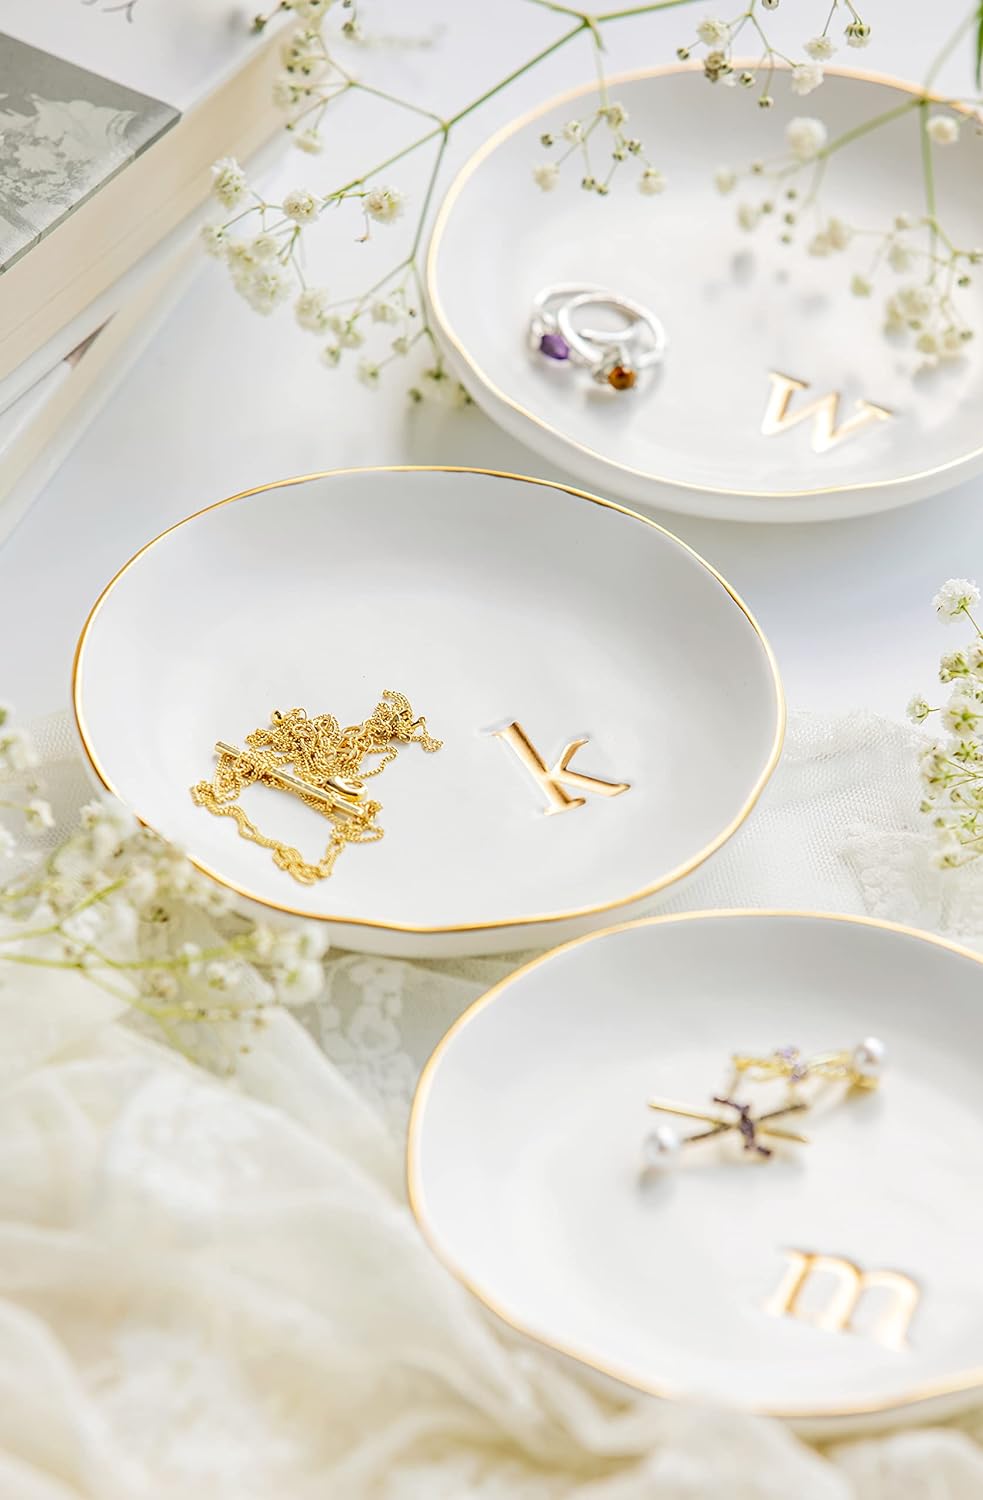 elegant round white ceramic jewelry trinket trays with golden monogram and rim lipped dish a b c customizable wedding gifts anniversary